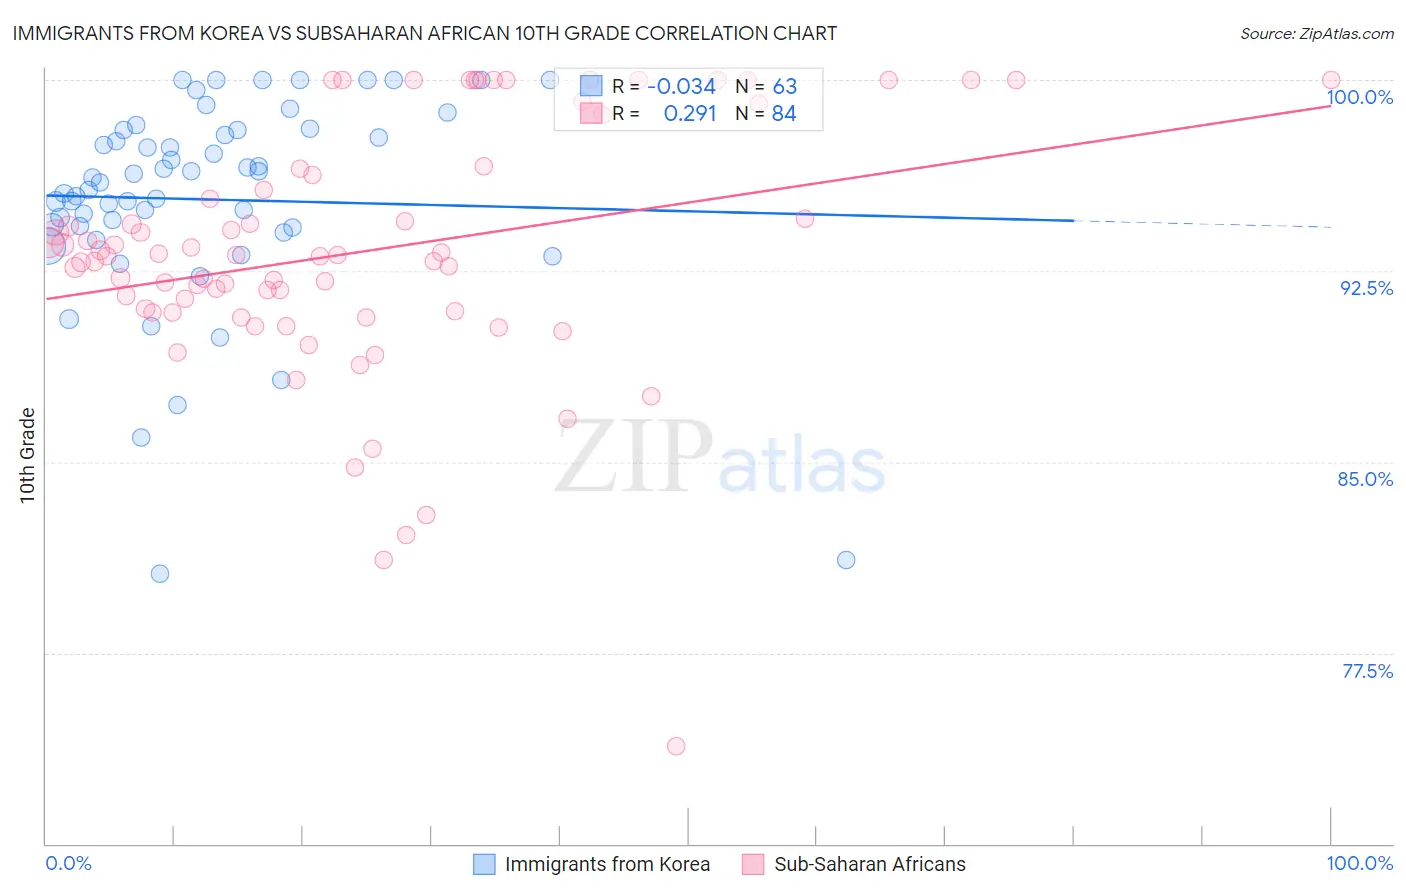 Immigrants from Korea vs Subsaharan African 10th Grade